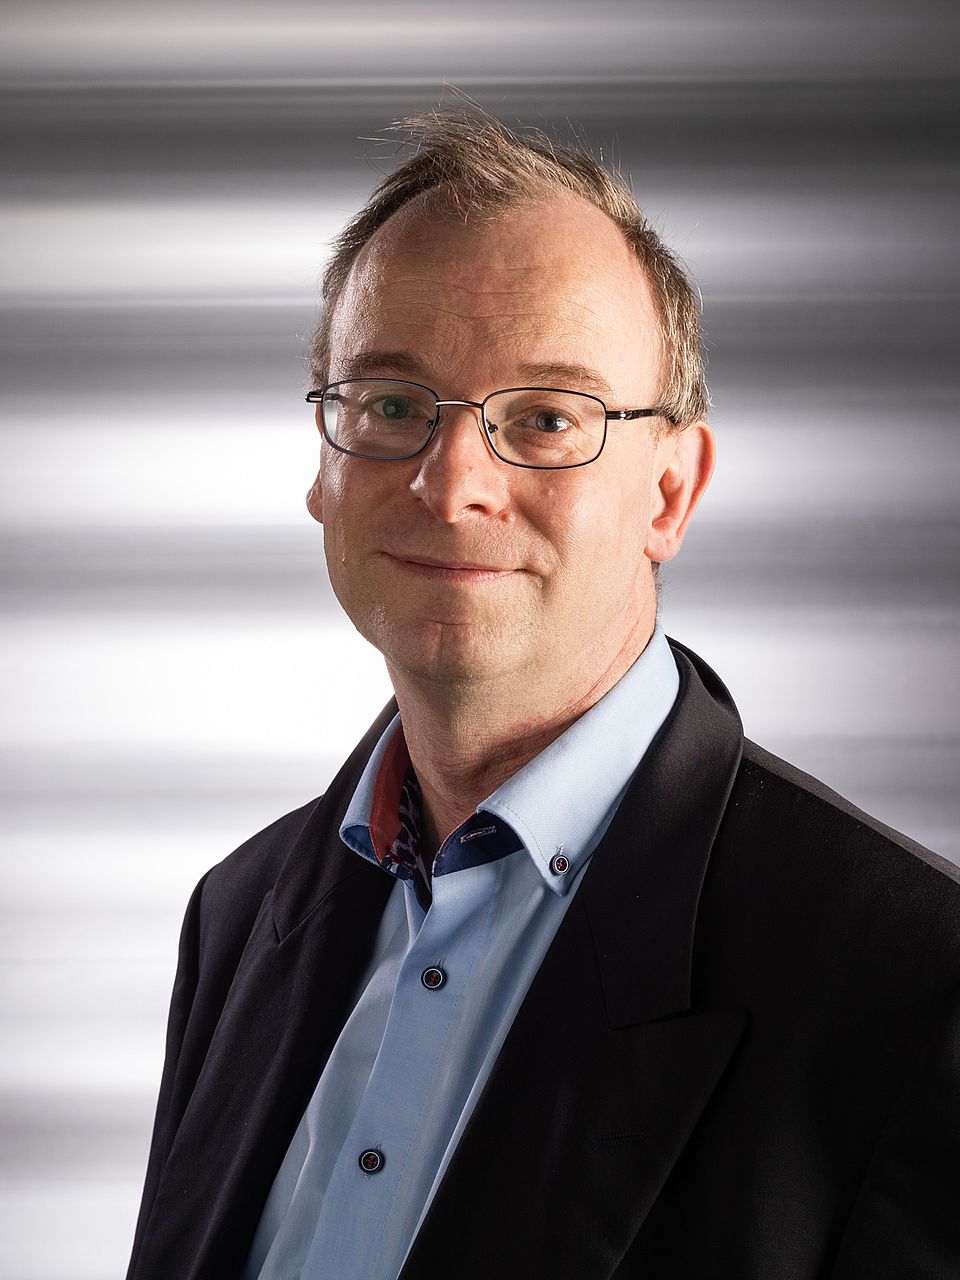 Dr. Patrick Ebnöther, research associate